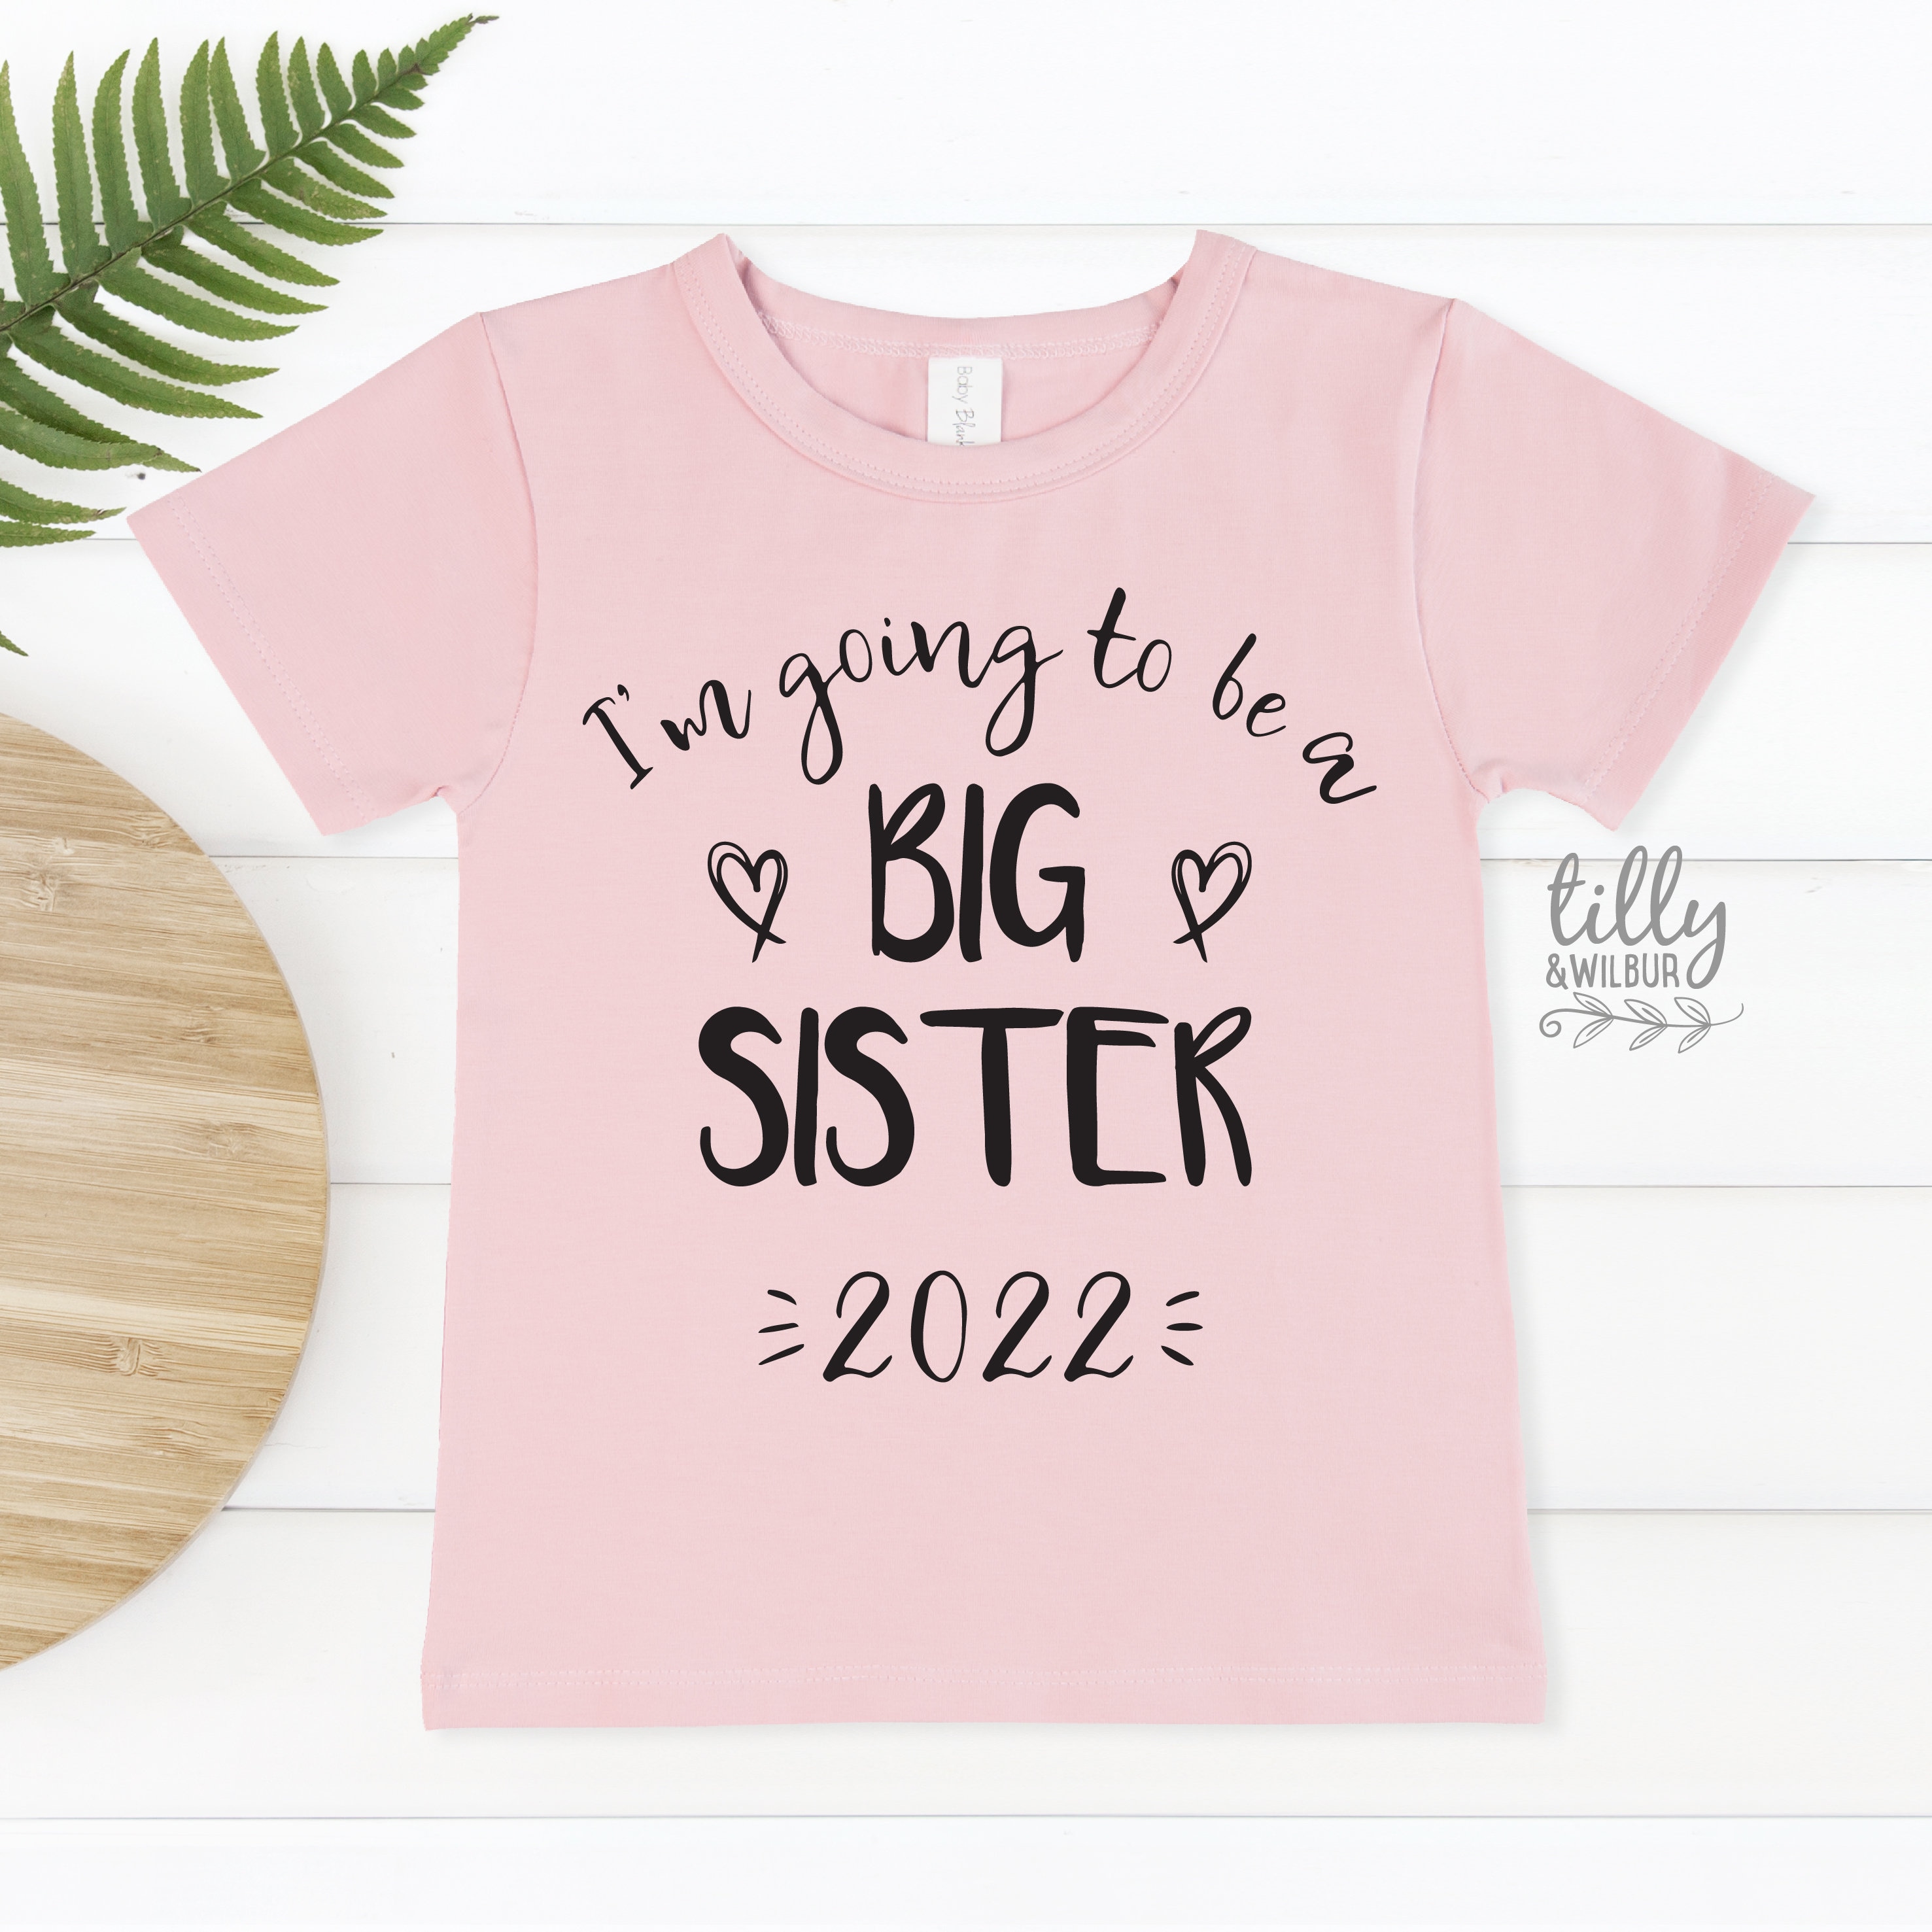 Promoted to big sister shirt